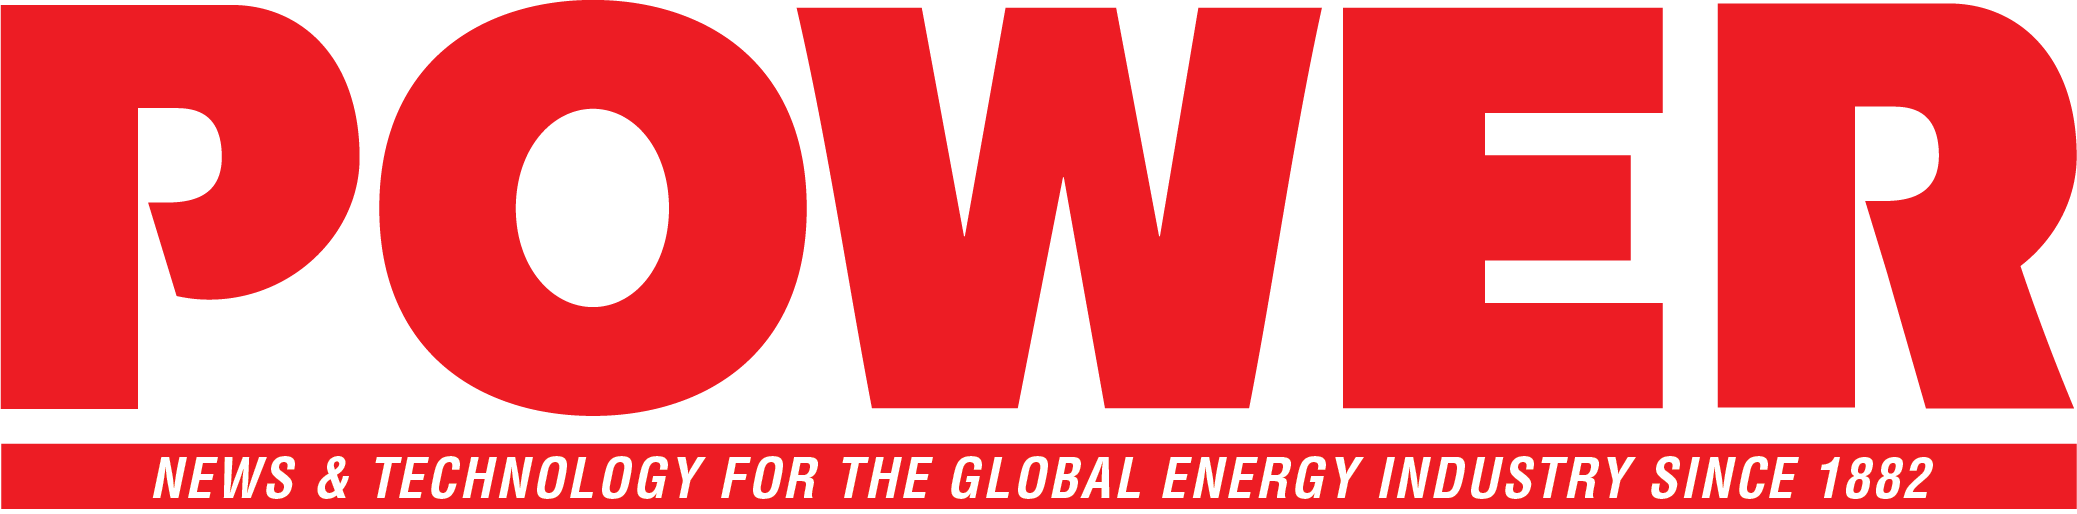 Power Magazine Logo.png